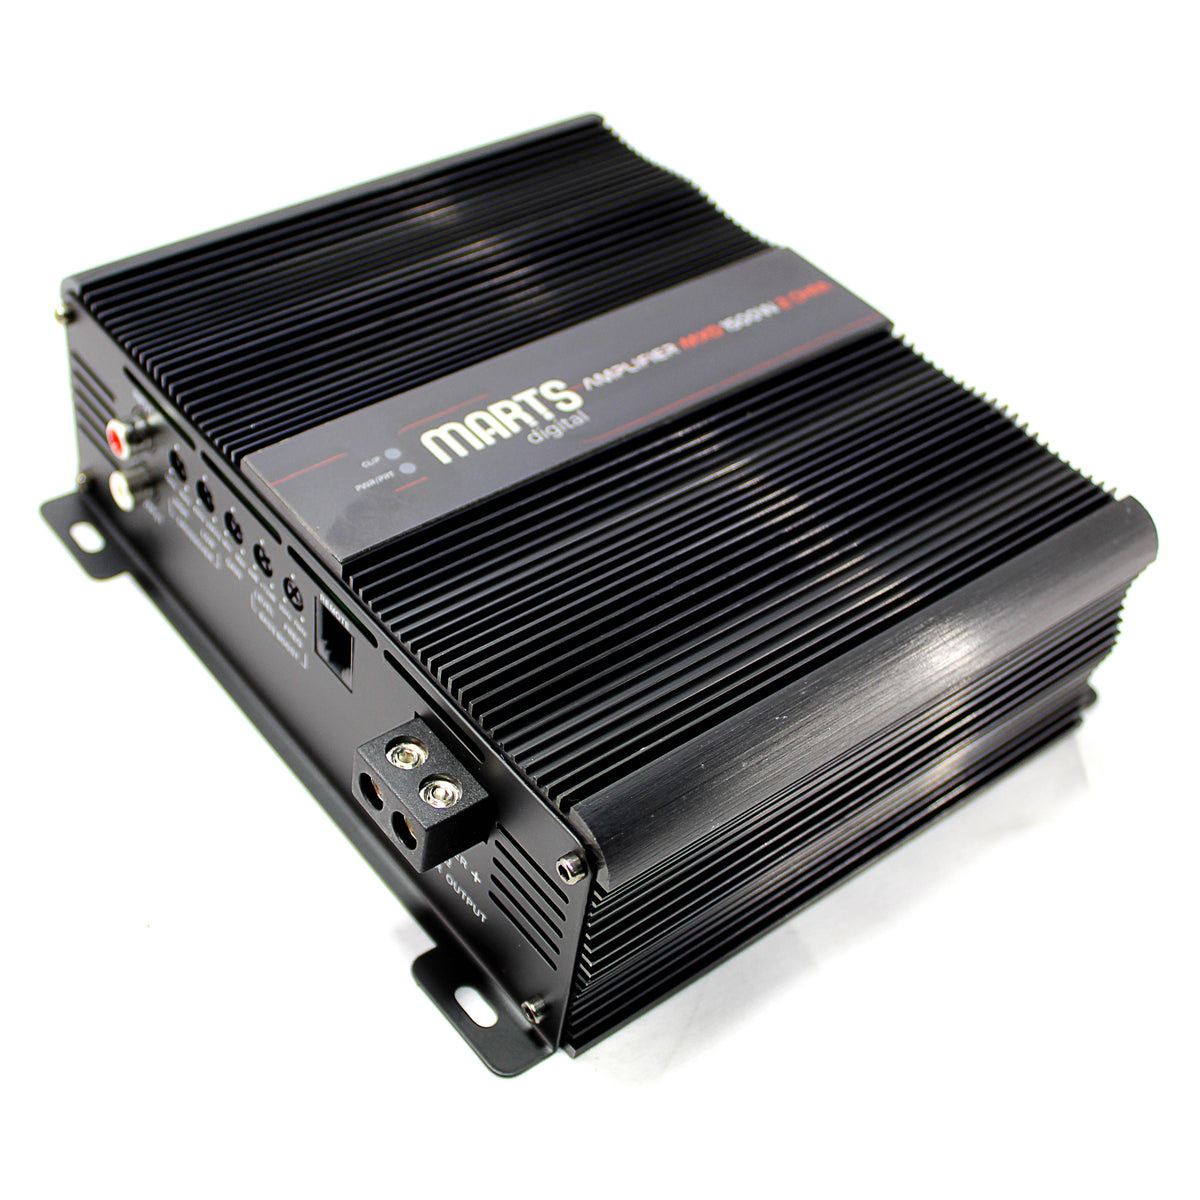 LED T10 RGB KIT CONTROL REMOTO - Bass Box Autoradio